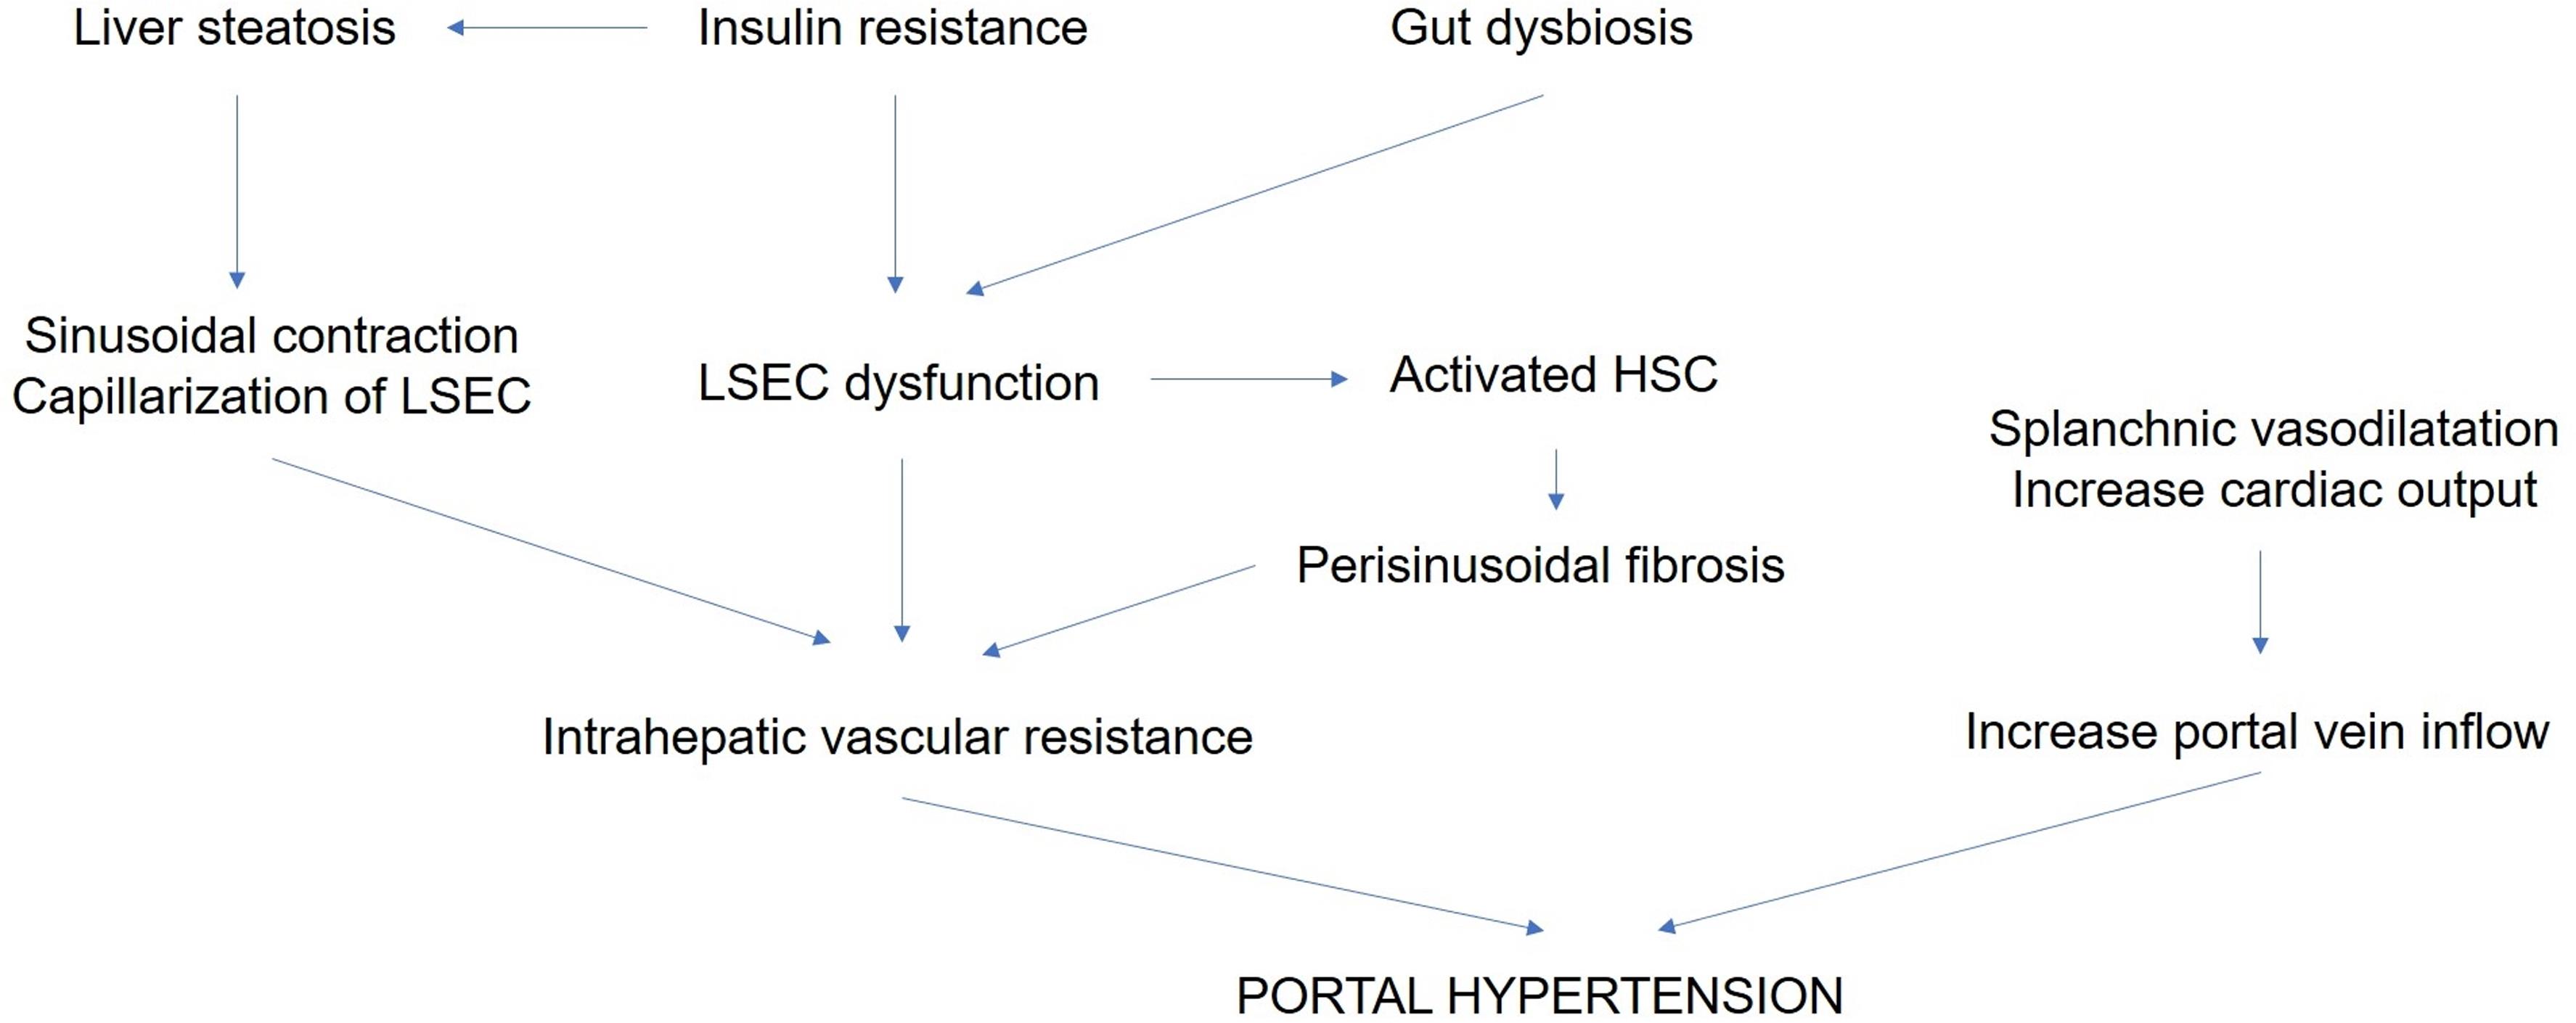 Theoretical framework of portal hypertension in NAFLD.